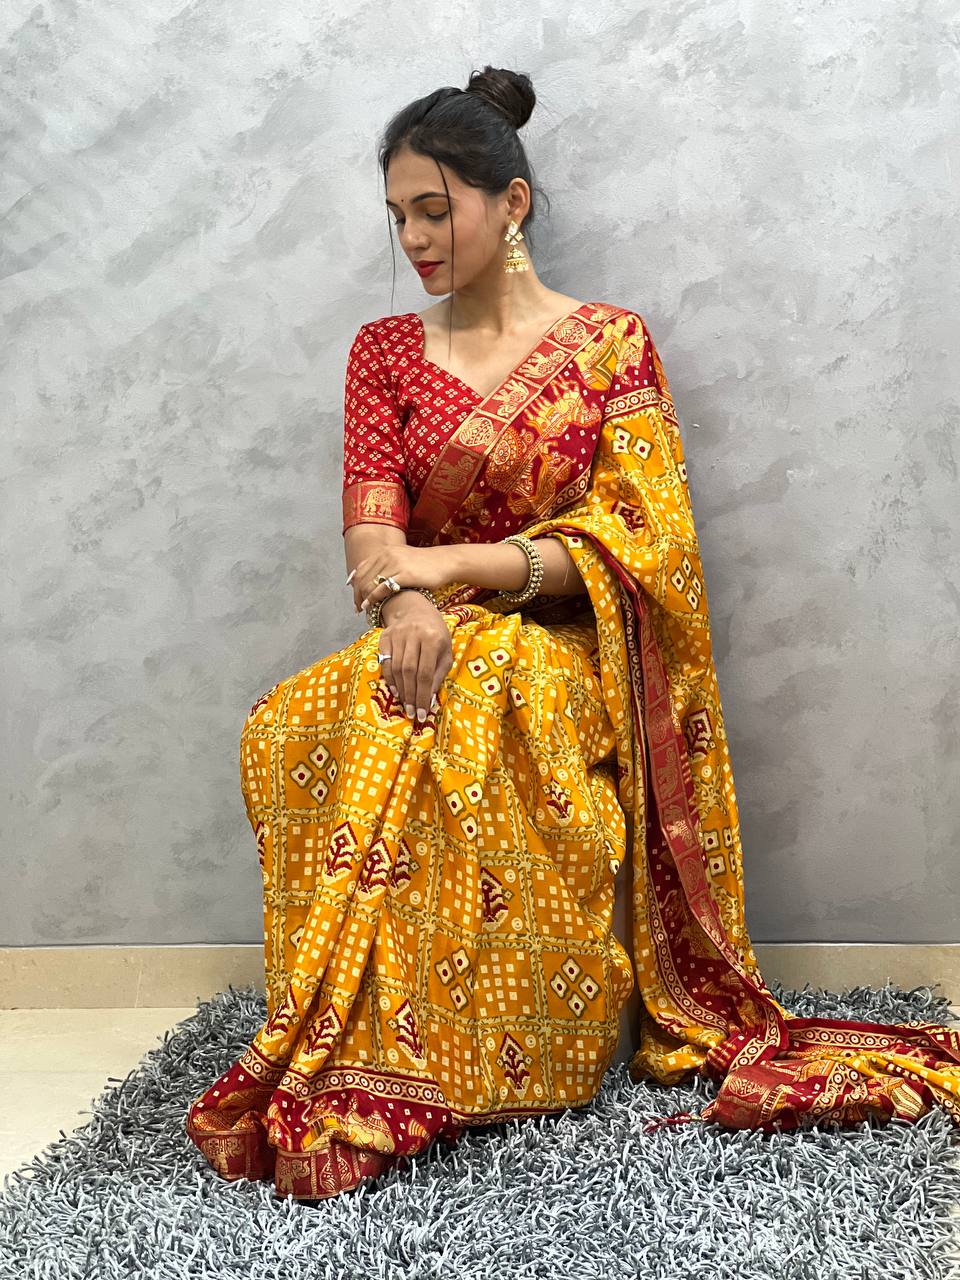 1-Min Ready To Wear Yellow Saree In Beautiful Rich Pallu